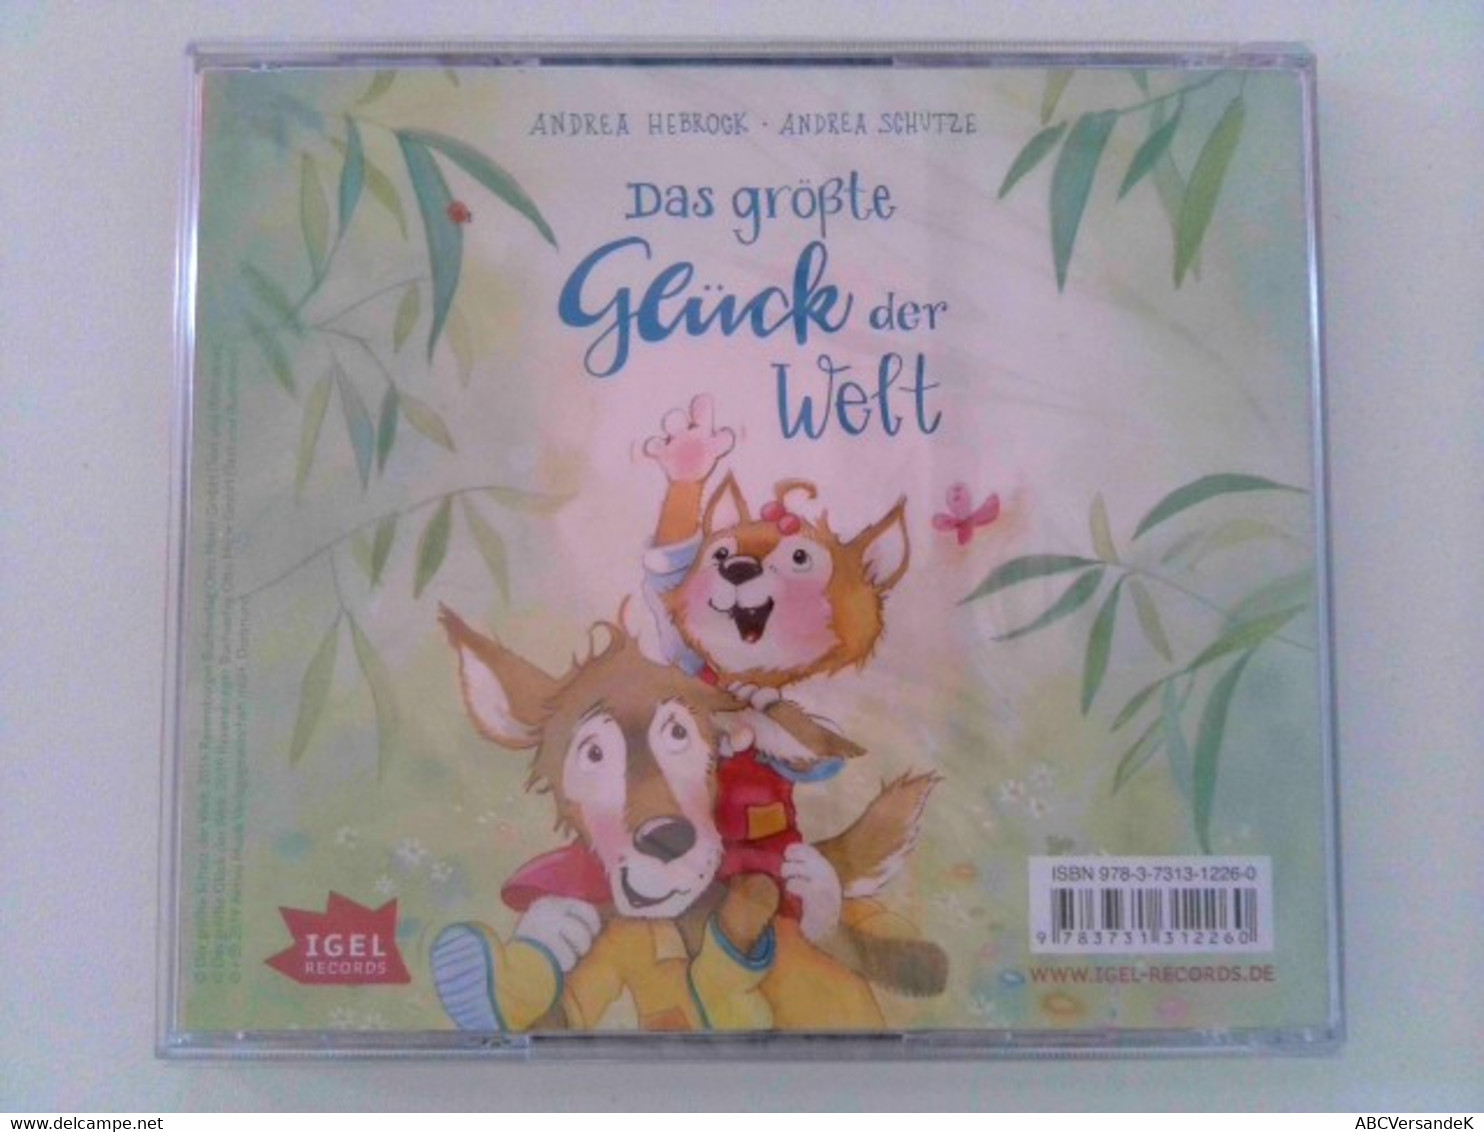 Der Größte Schatz Der Welt / Das Größte Glück Der Welt: CD Standard Audio Format, Lesung - CD